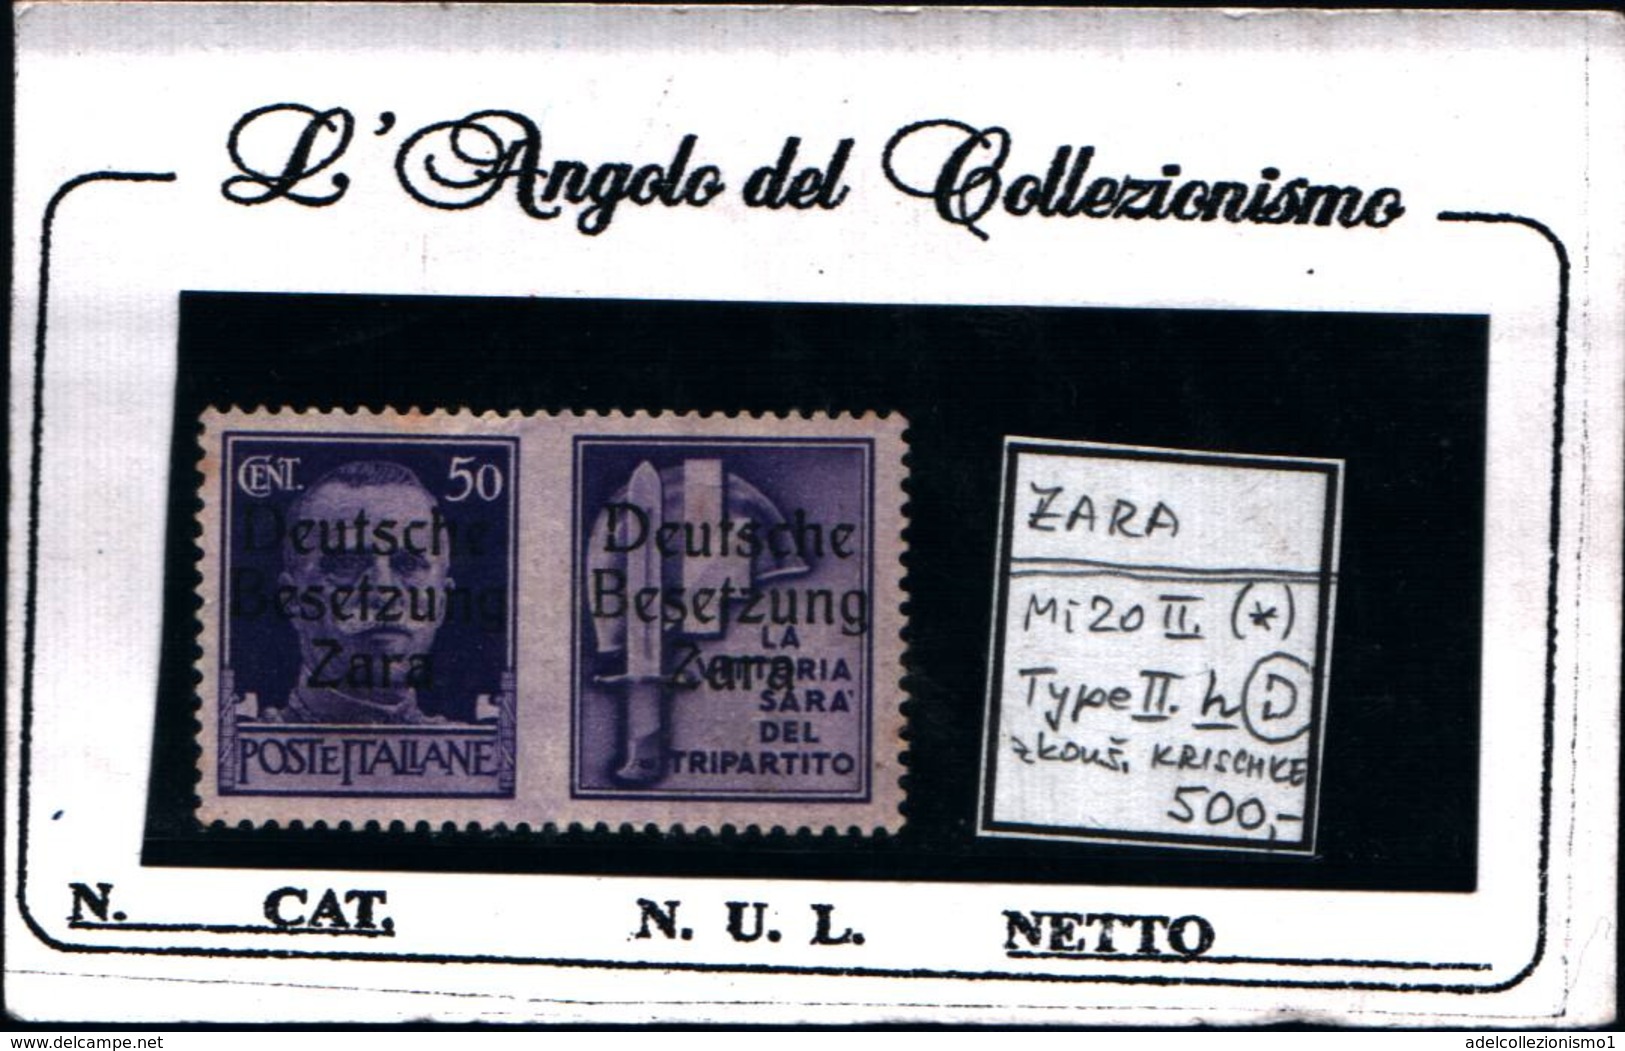 6940B) ITALIA- Zara, 50C. Serie Di Propaganda Sovrastampata - 9 Ottobre 1943-MI 20 II-TYPE II H -FIRMATO SENZA GOMMA - Ocu. Alemana: Zara